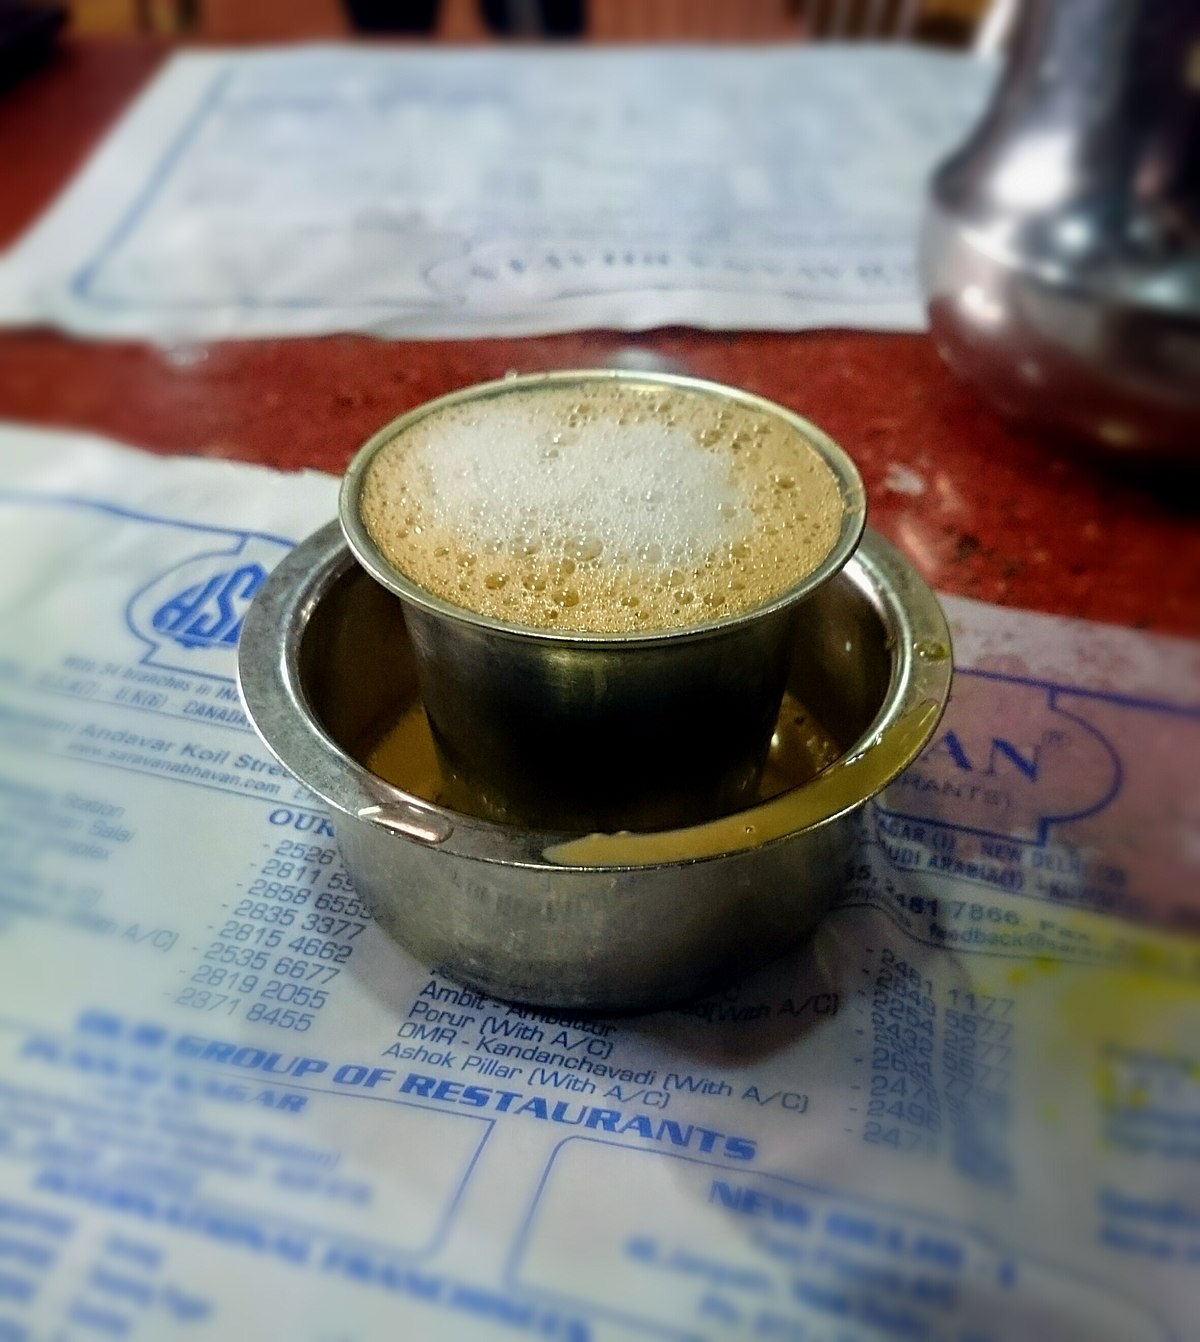 https://upload.wikimedia.org/wikipedia/commons/thumb/d/d5/Filter_Coffee_from_Saravana_Bhavan.jpg/1200px-Filter_Coffee_from_Saravana_Bhavan.jpg